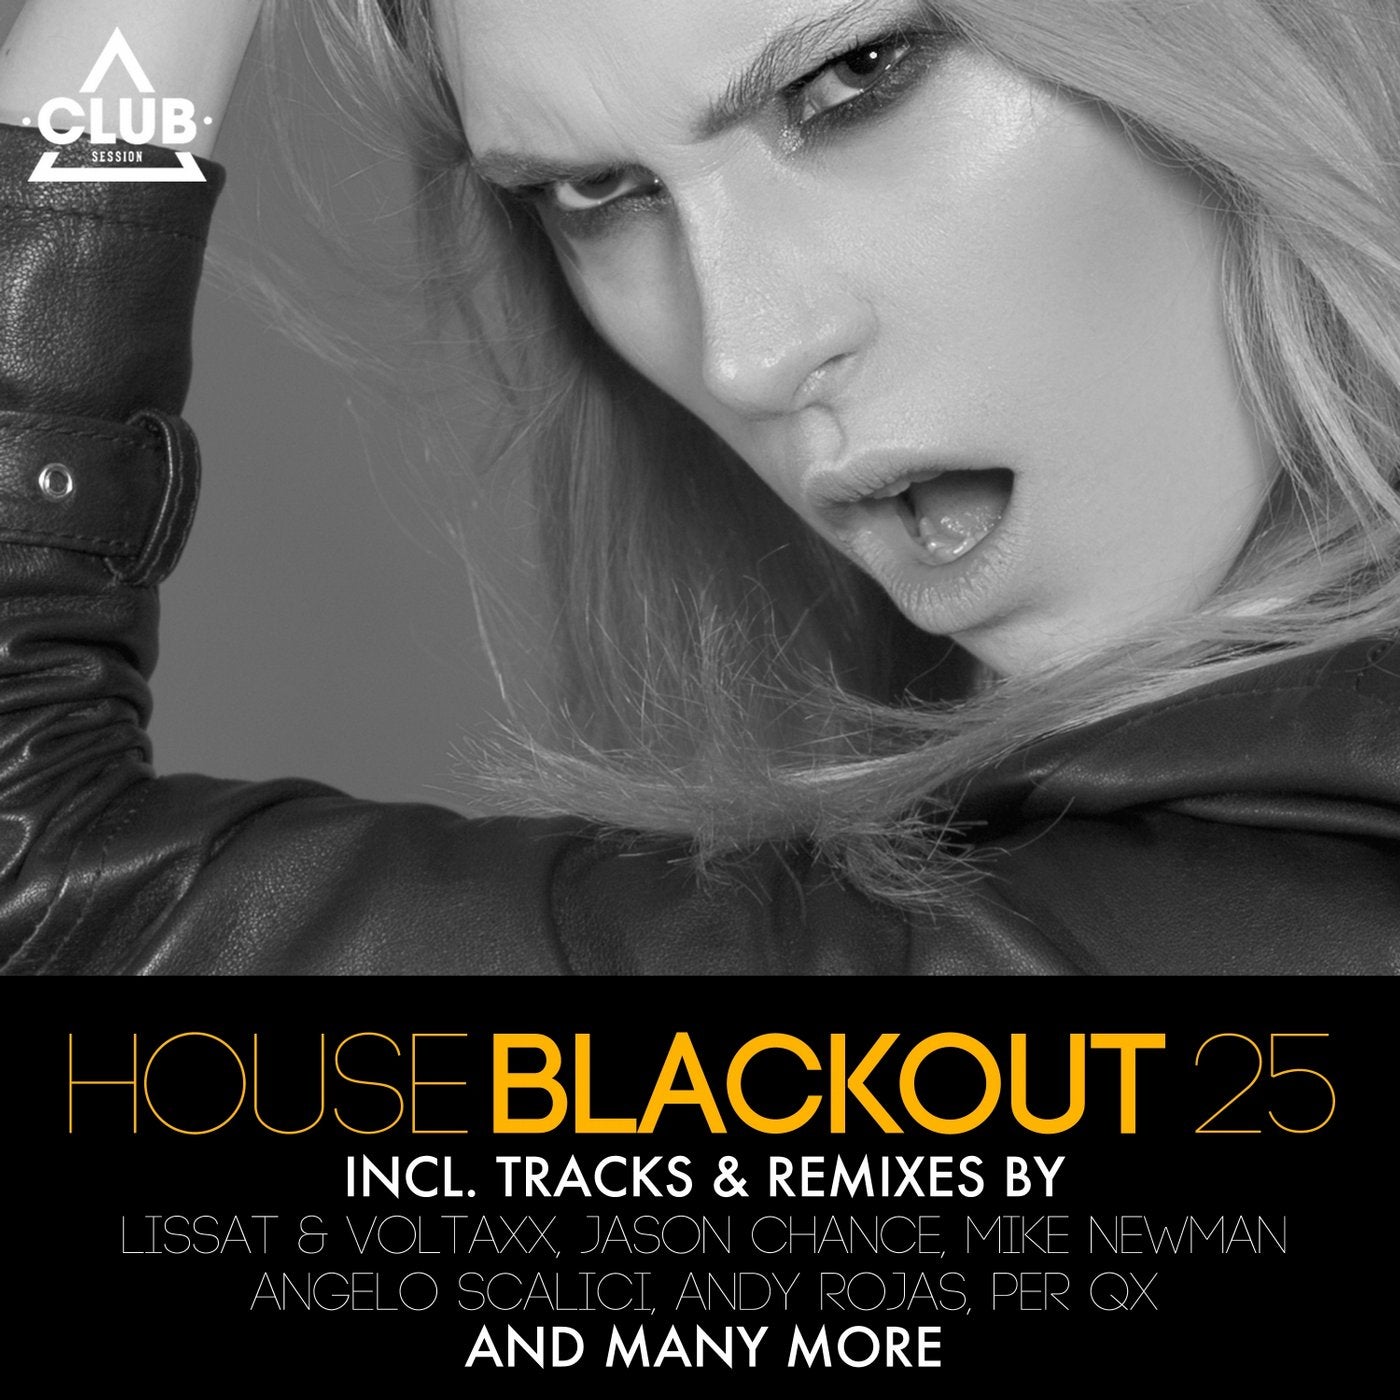 House Blackout Vol. 25